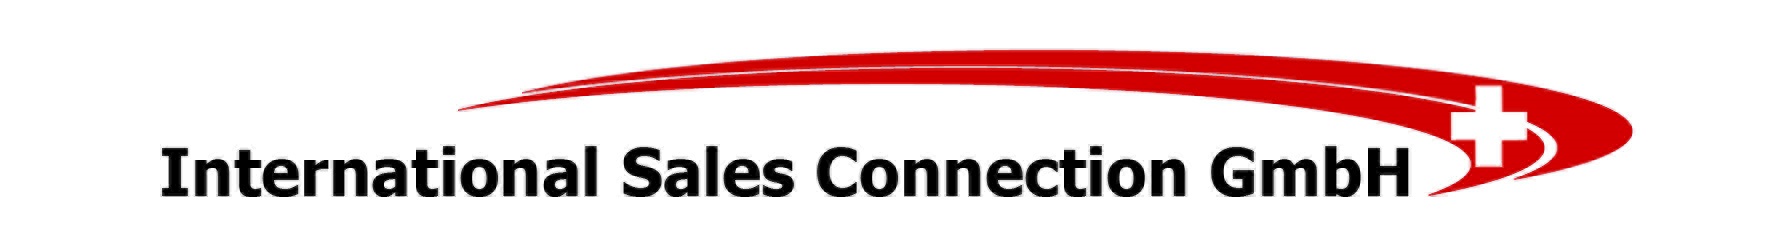 International Sales Connection - GmbH